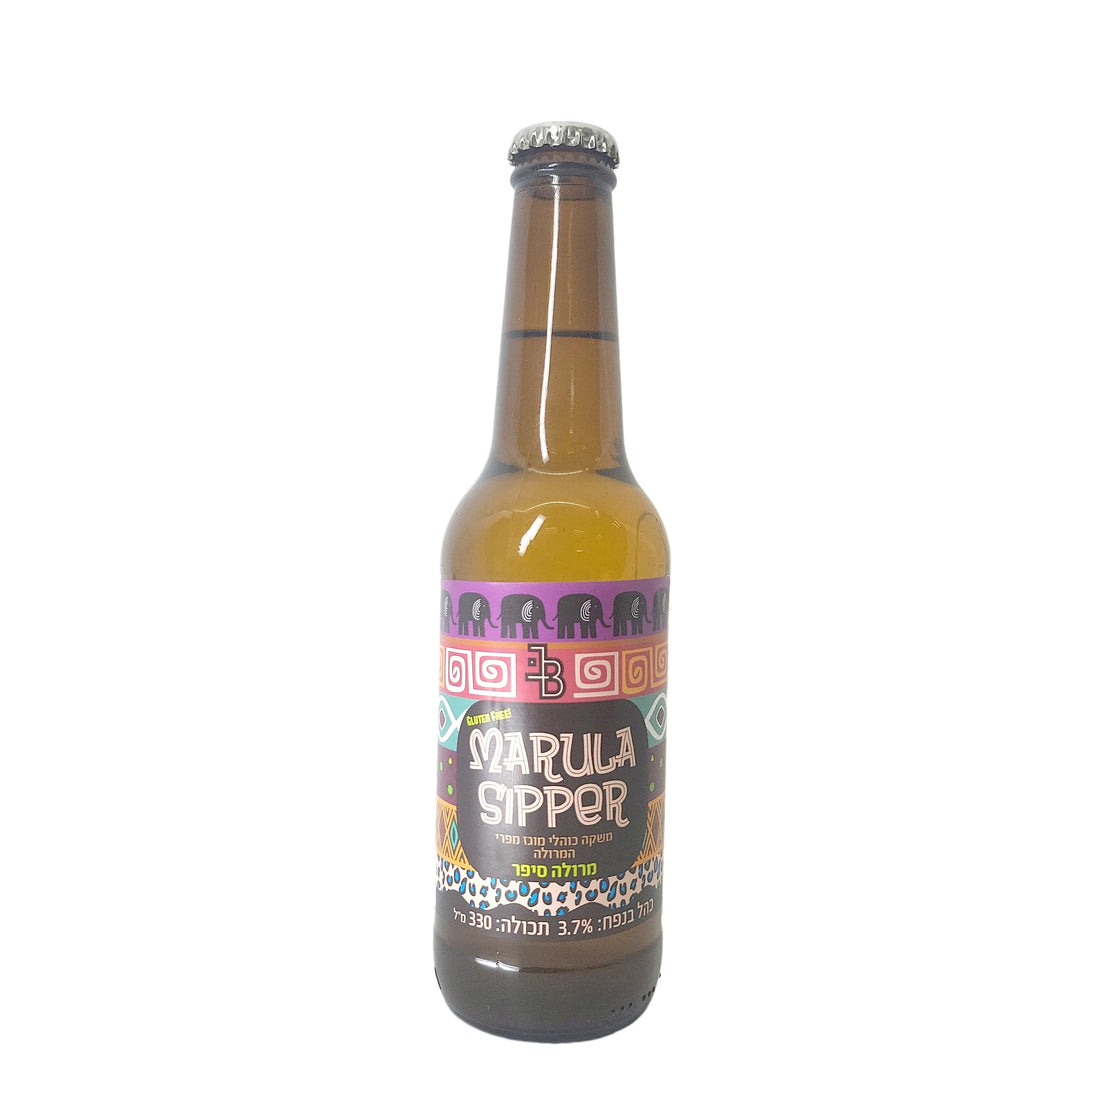 Marula Sipper beverage